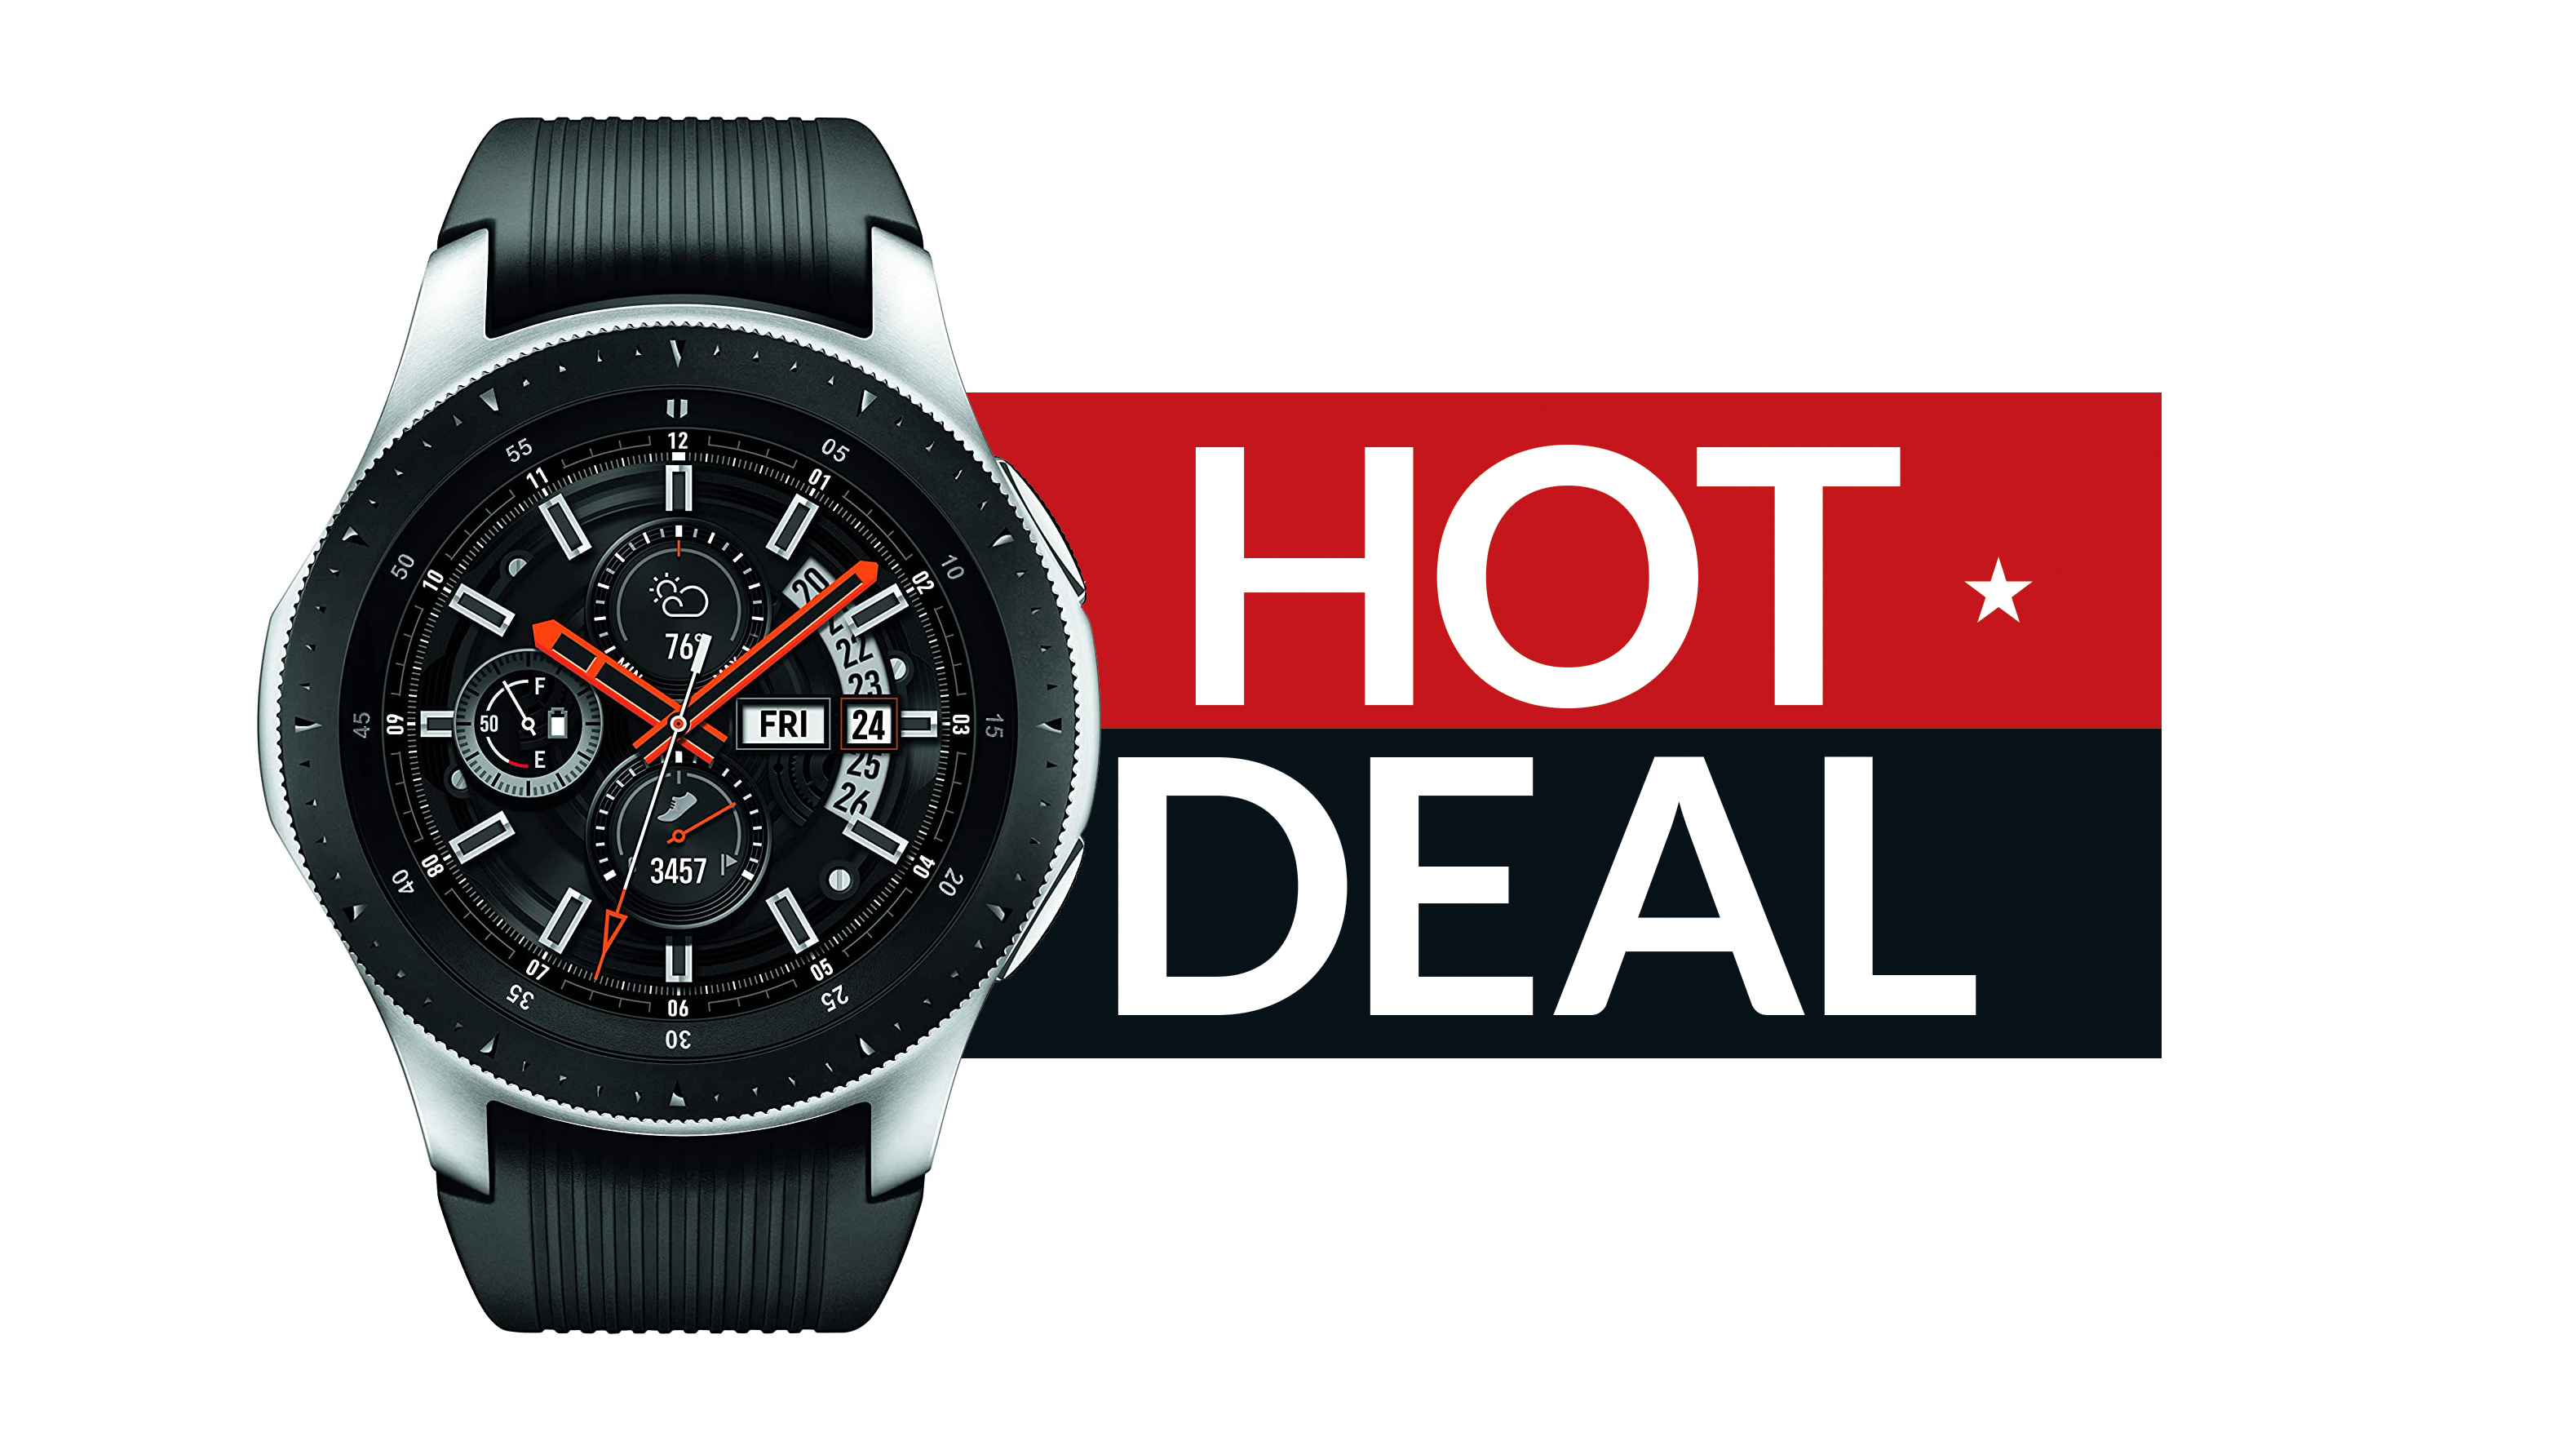 The best Samsung Galaxy Watch deals for 